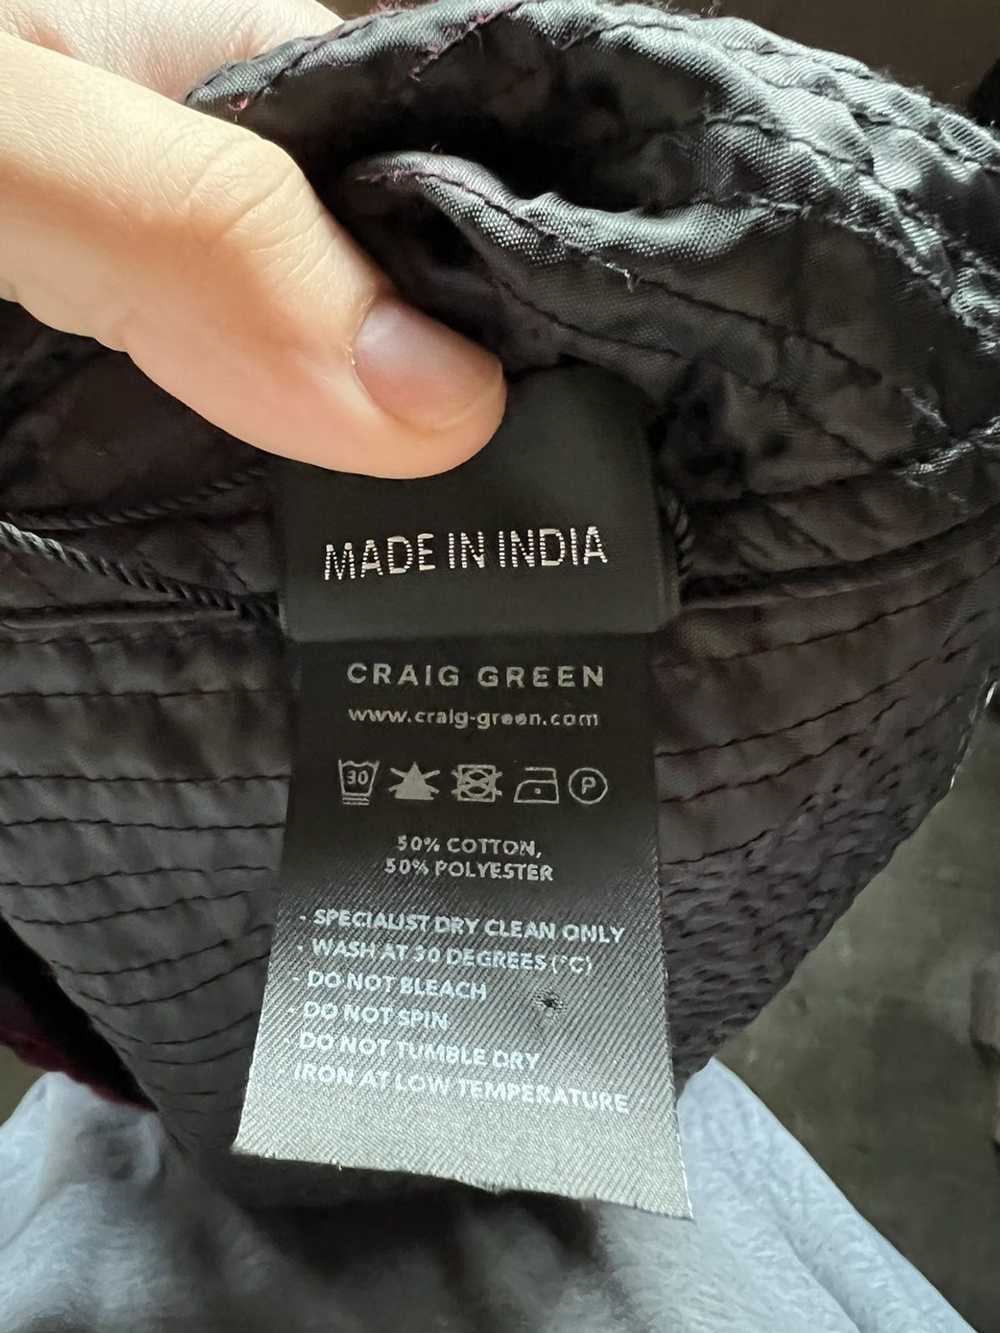 Craig Green Craig Green Plaid Work Jacket - image 5